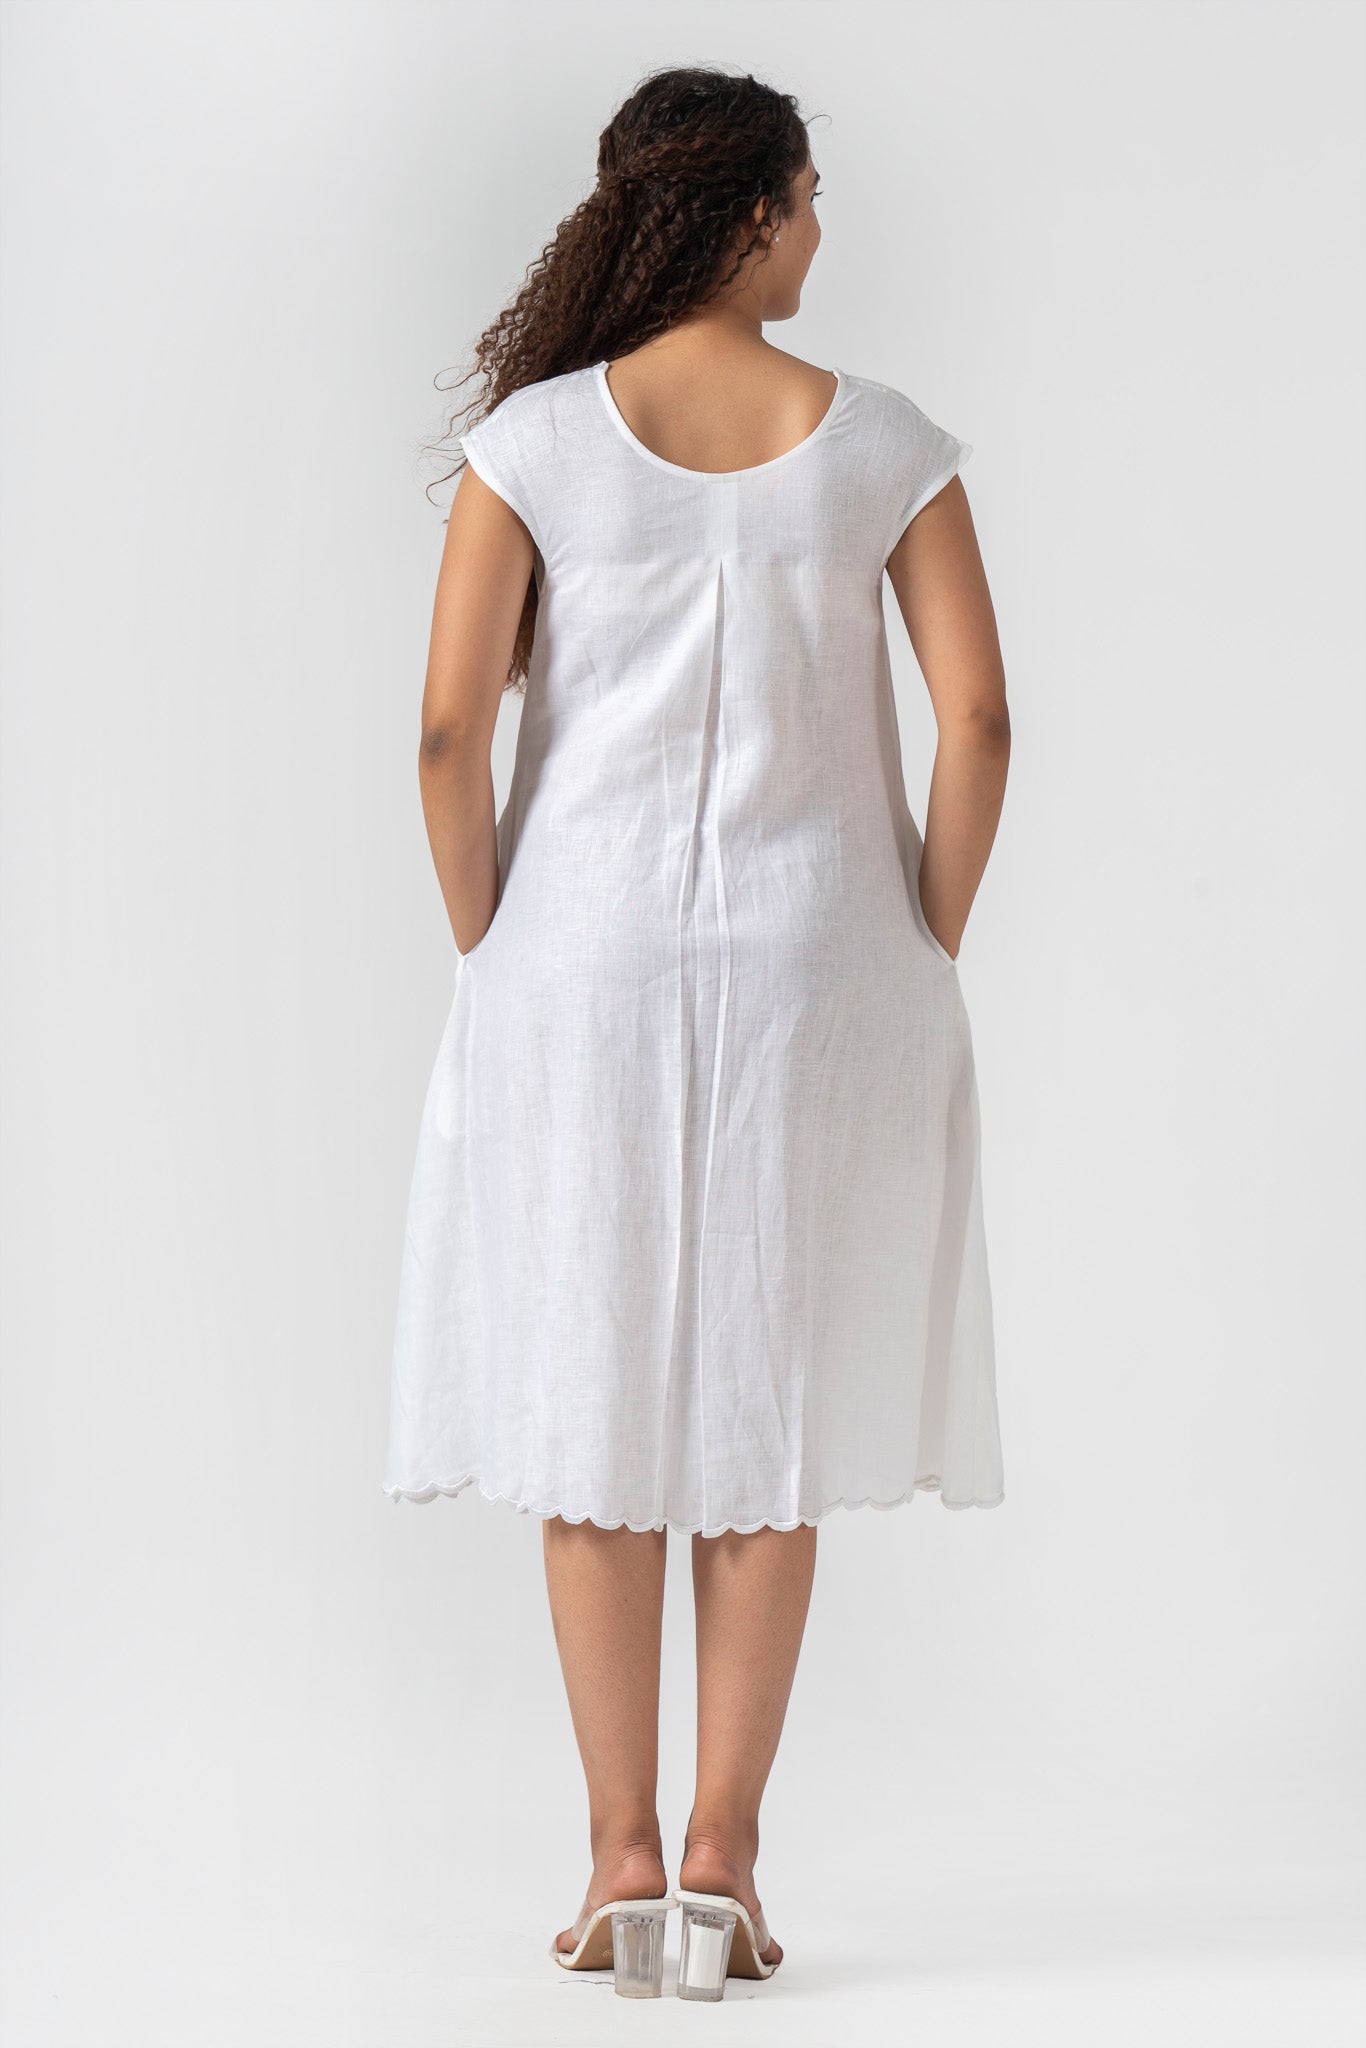 Fabricrush White Indian Hand Block Printed Cotton Dress for Summers, Wedding Dress, Comfort Wear, Maxi Dress, Daily Wear